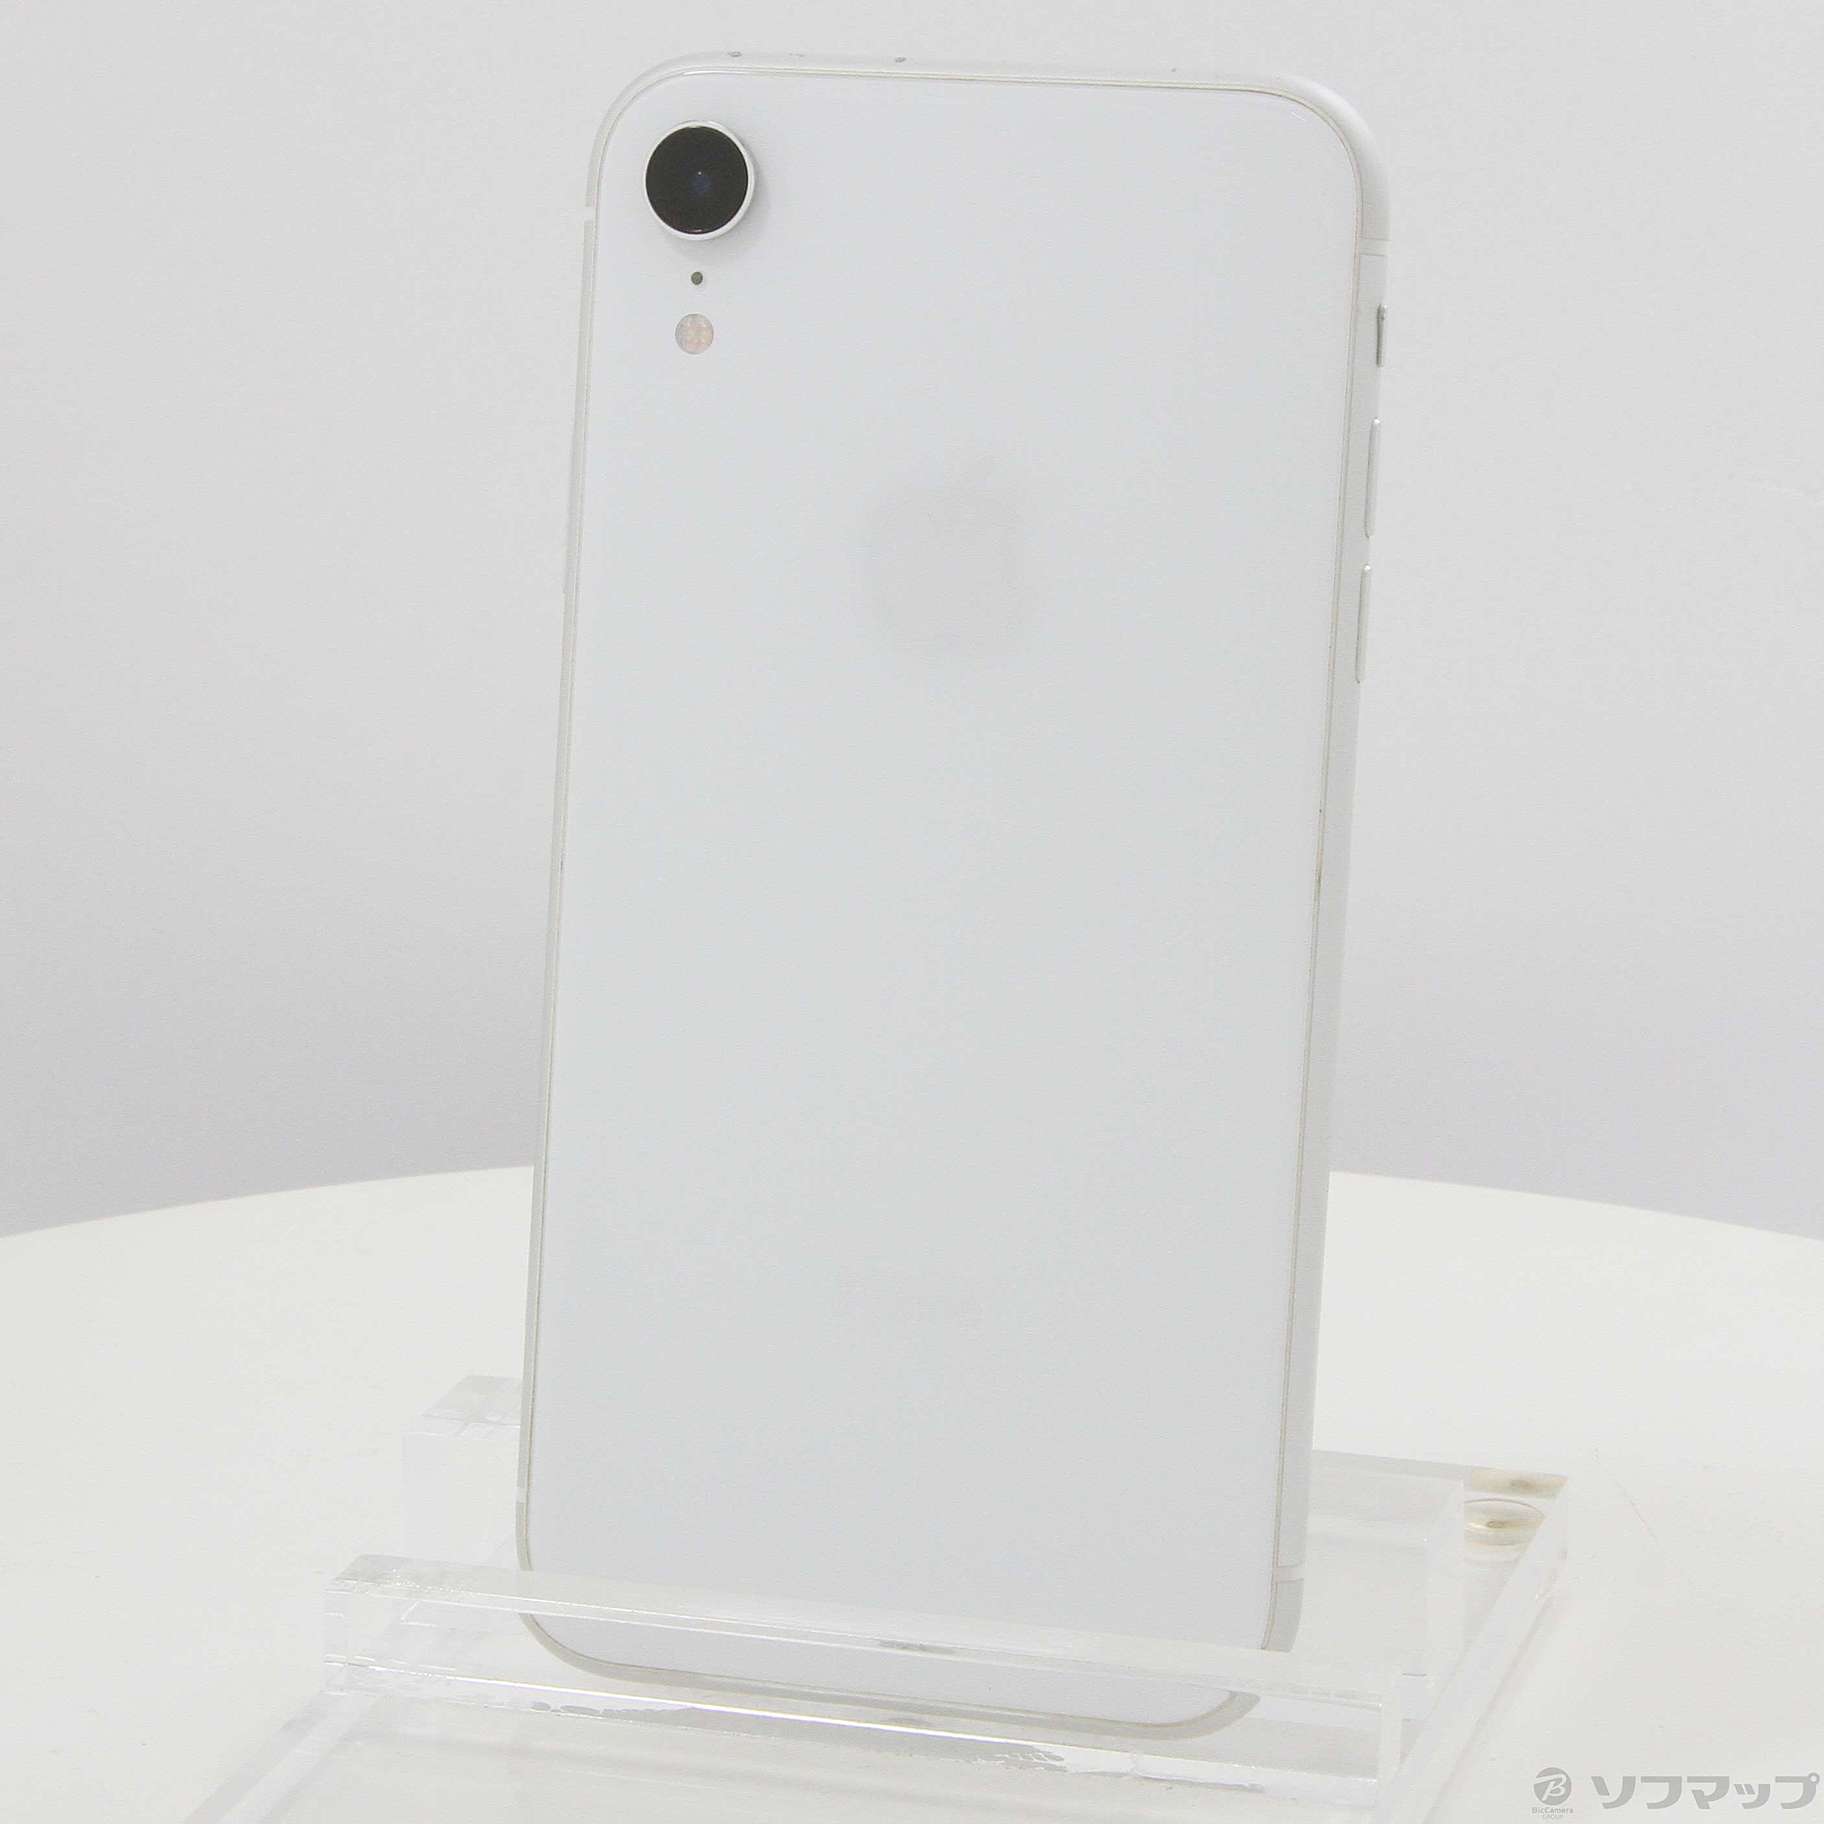 新品】iPhone XR 64GB White (Simフリー) gloriabeautyme.com